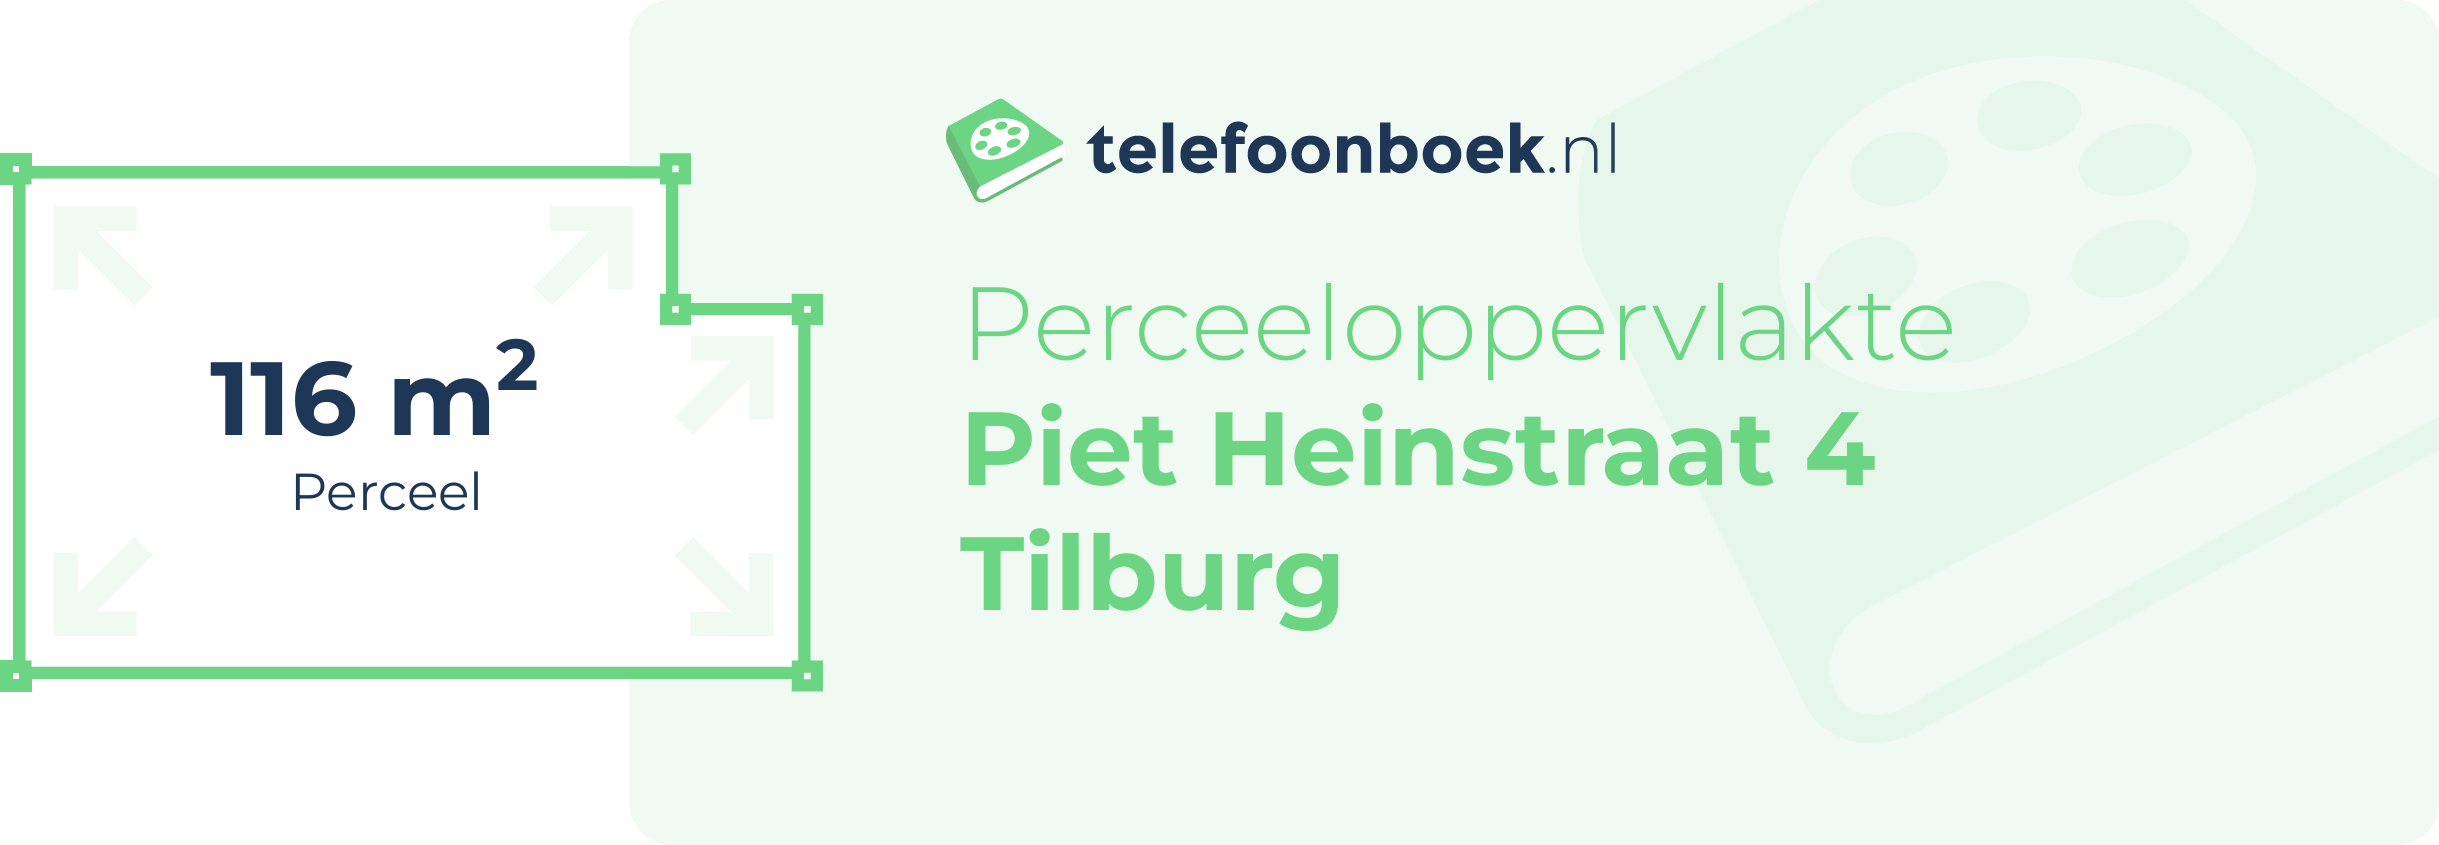 Perceeloppervlakte Piet Heinstraat 4 Tilburg